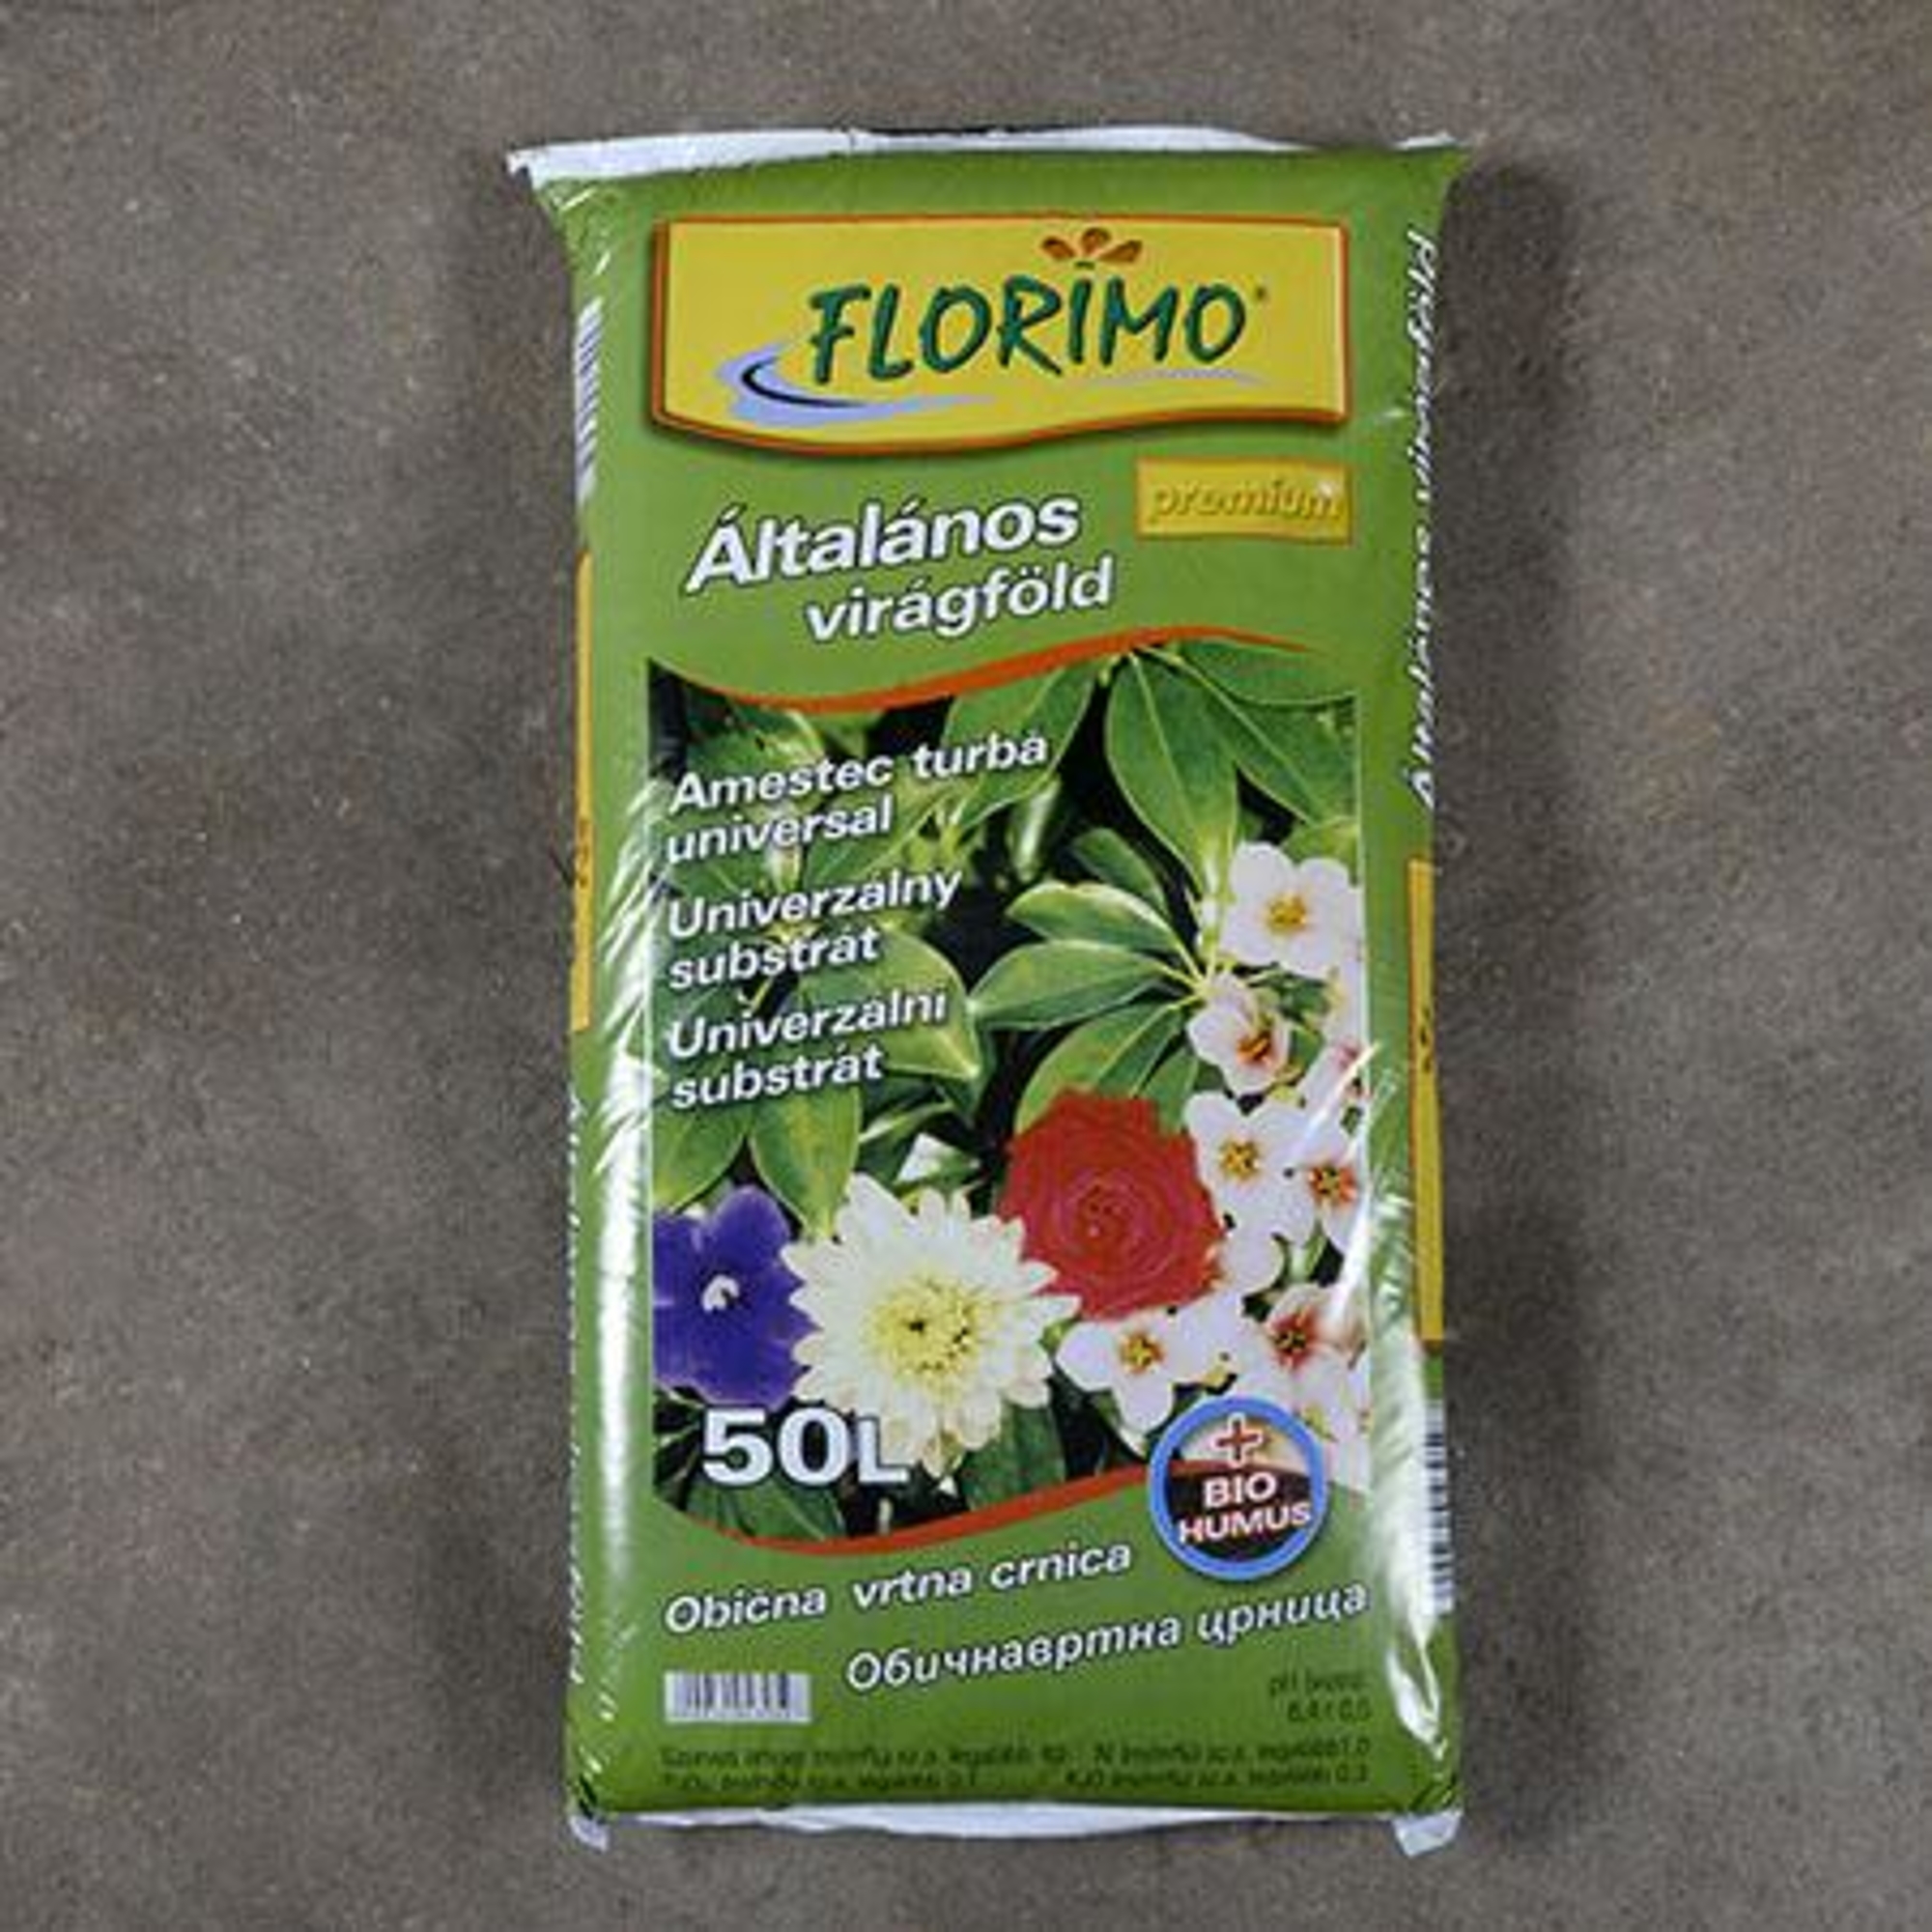 Florimo általános virágföld 50 l